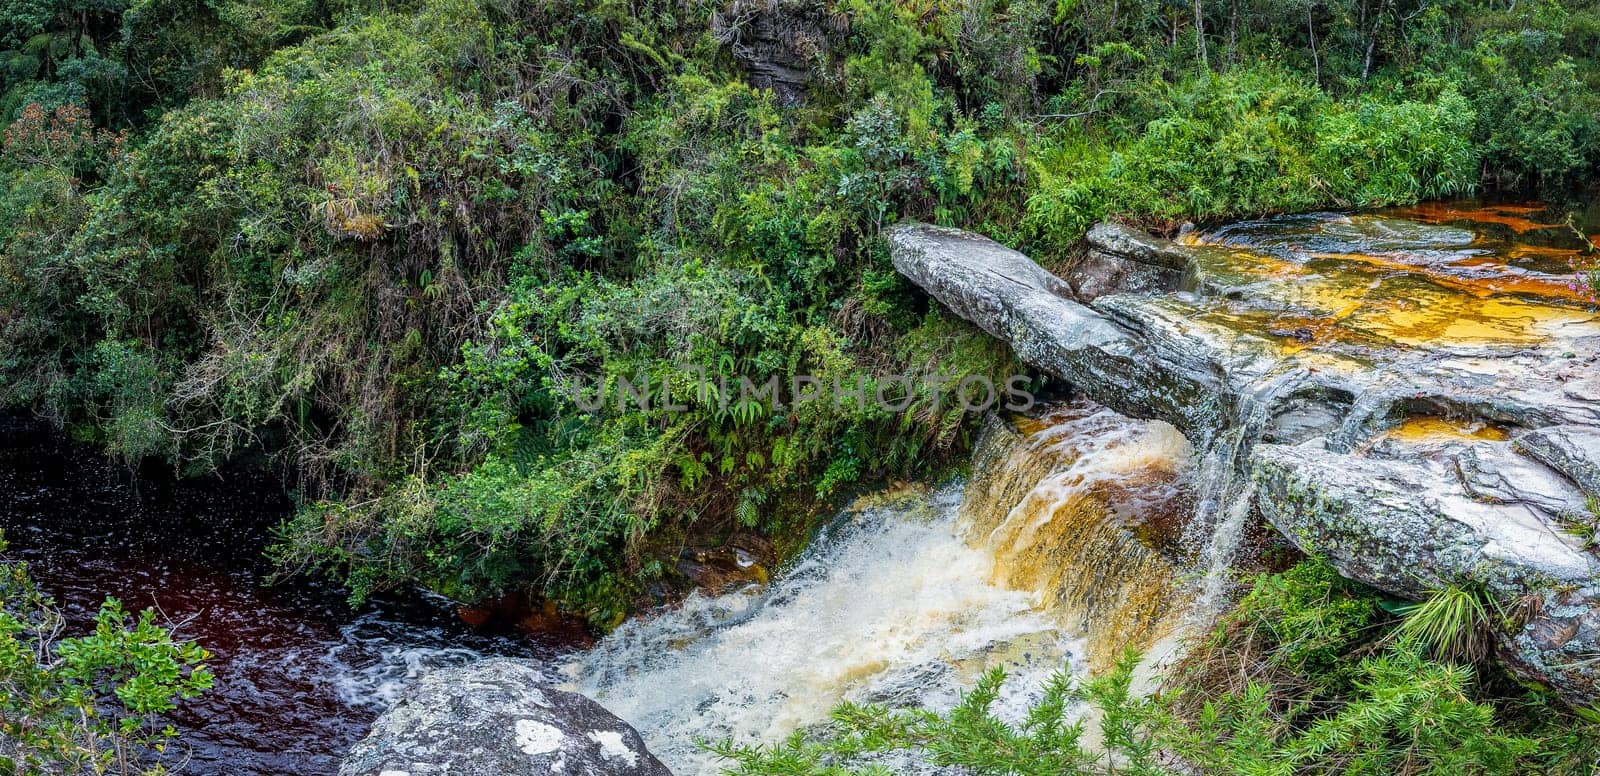 Serene Waterfall in Lush Green Forest Landscape by FerradalFCG